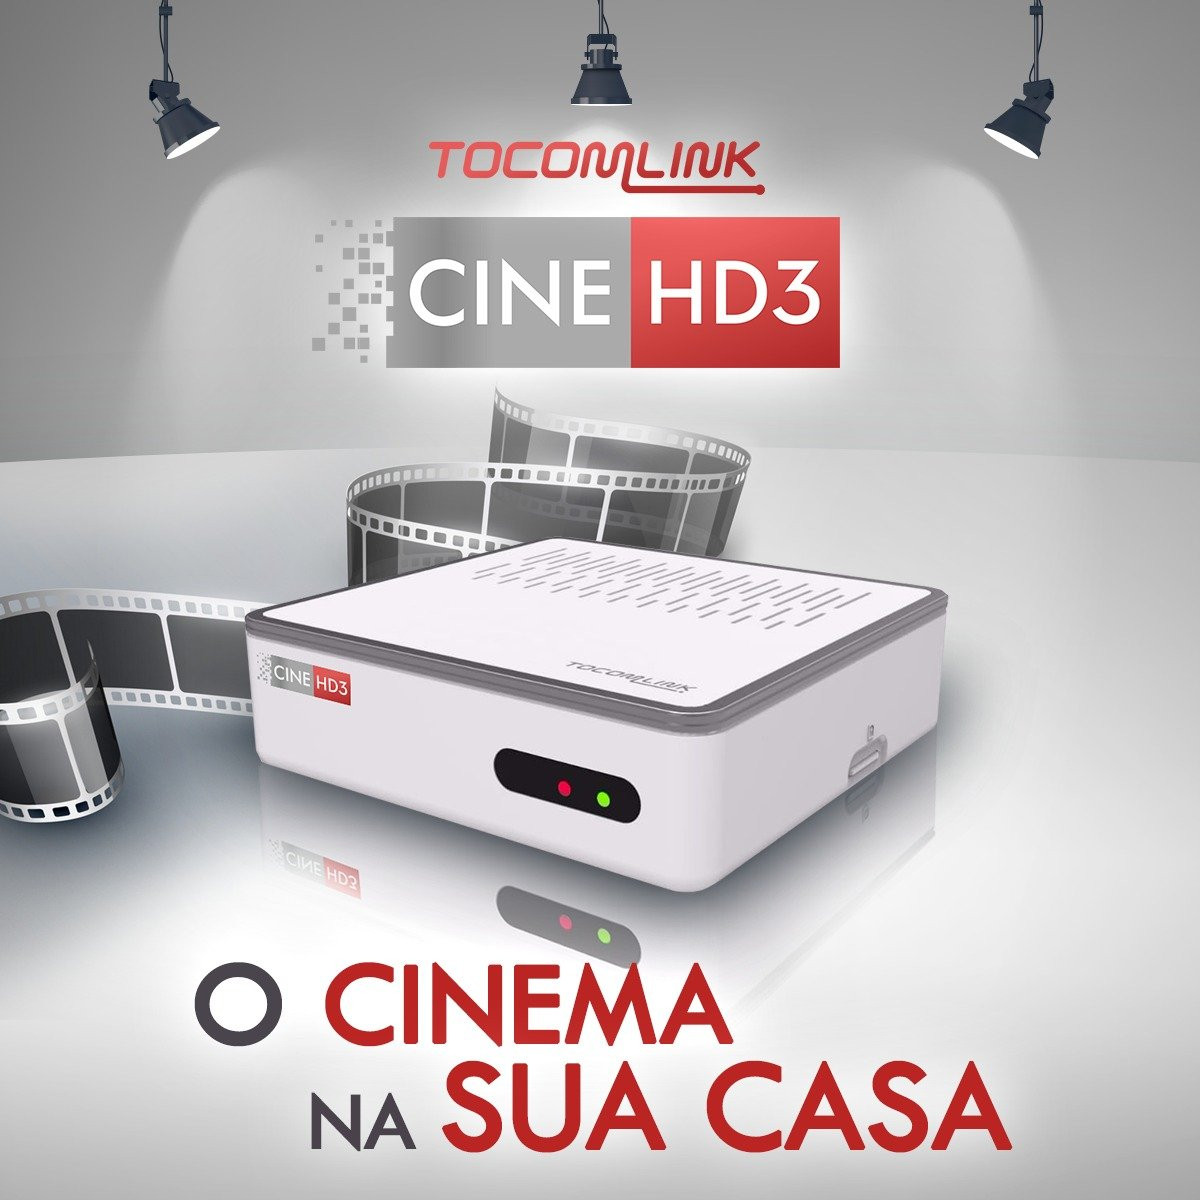 Receptor TocomLink Cine HD3